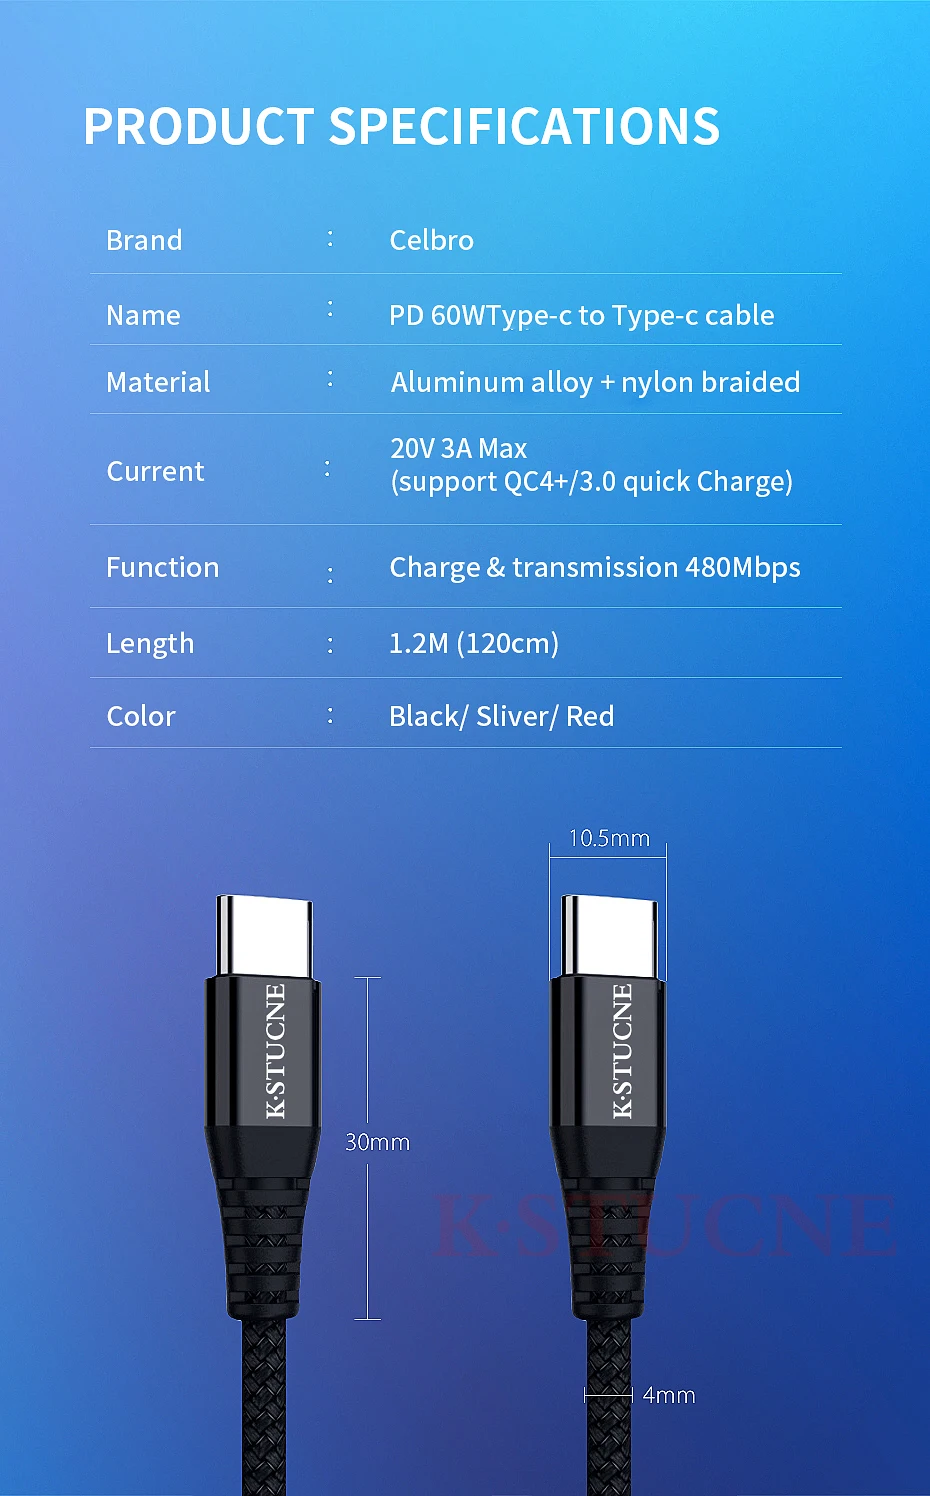 Кабель USB C к usb type-C для Xiaomi Redmi K20 Note 8 7 Pro Quick Charge 3,0 кабель type-C для samsung S9 Plus USB-C